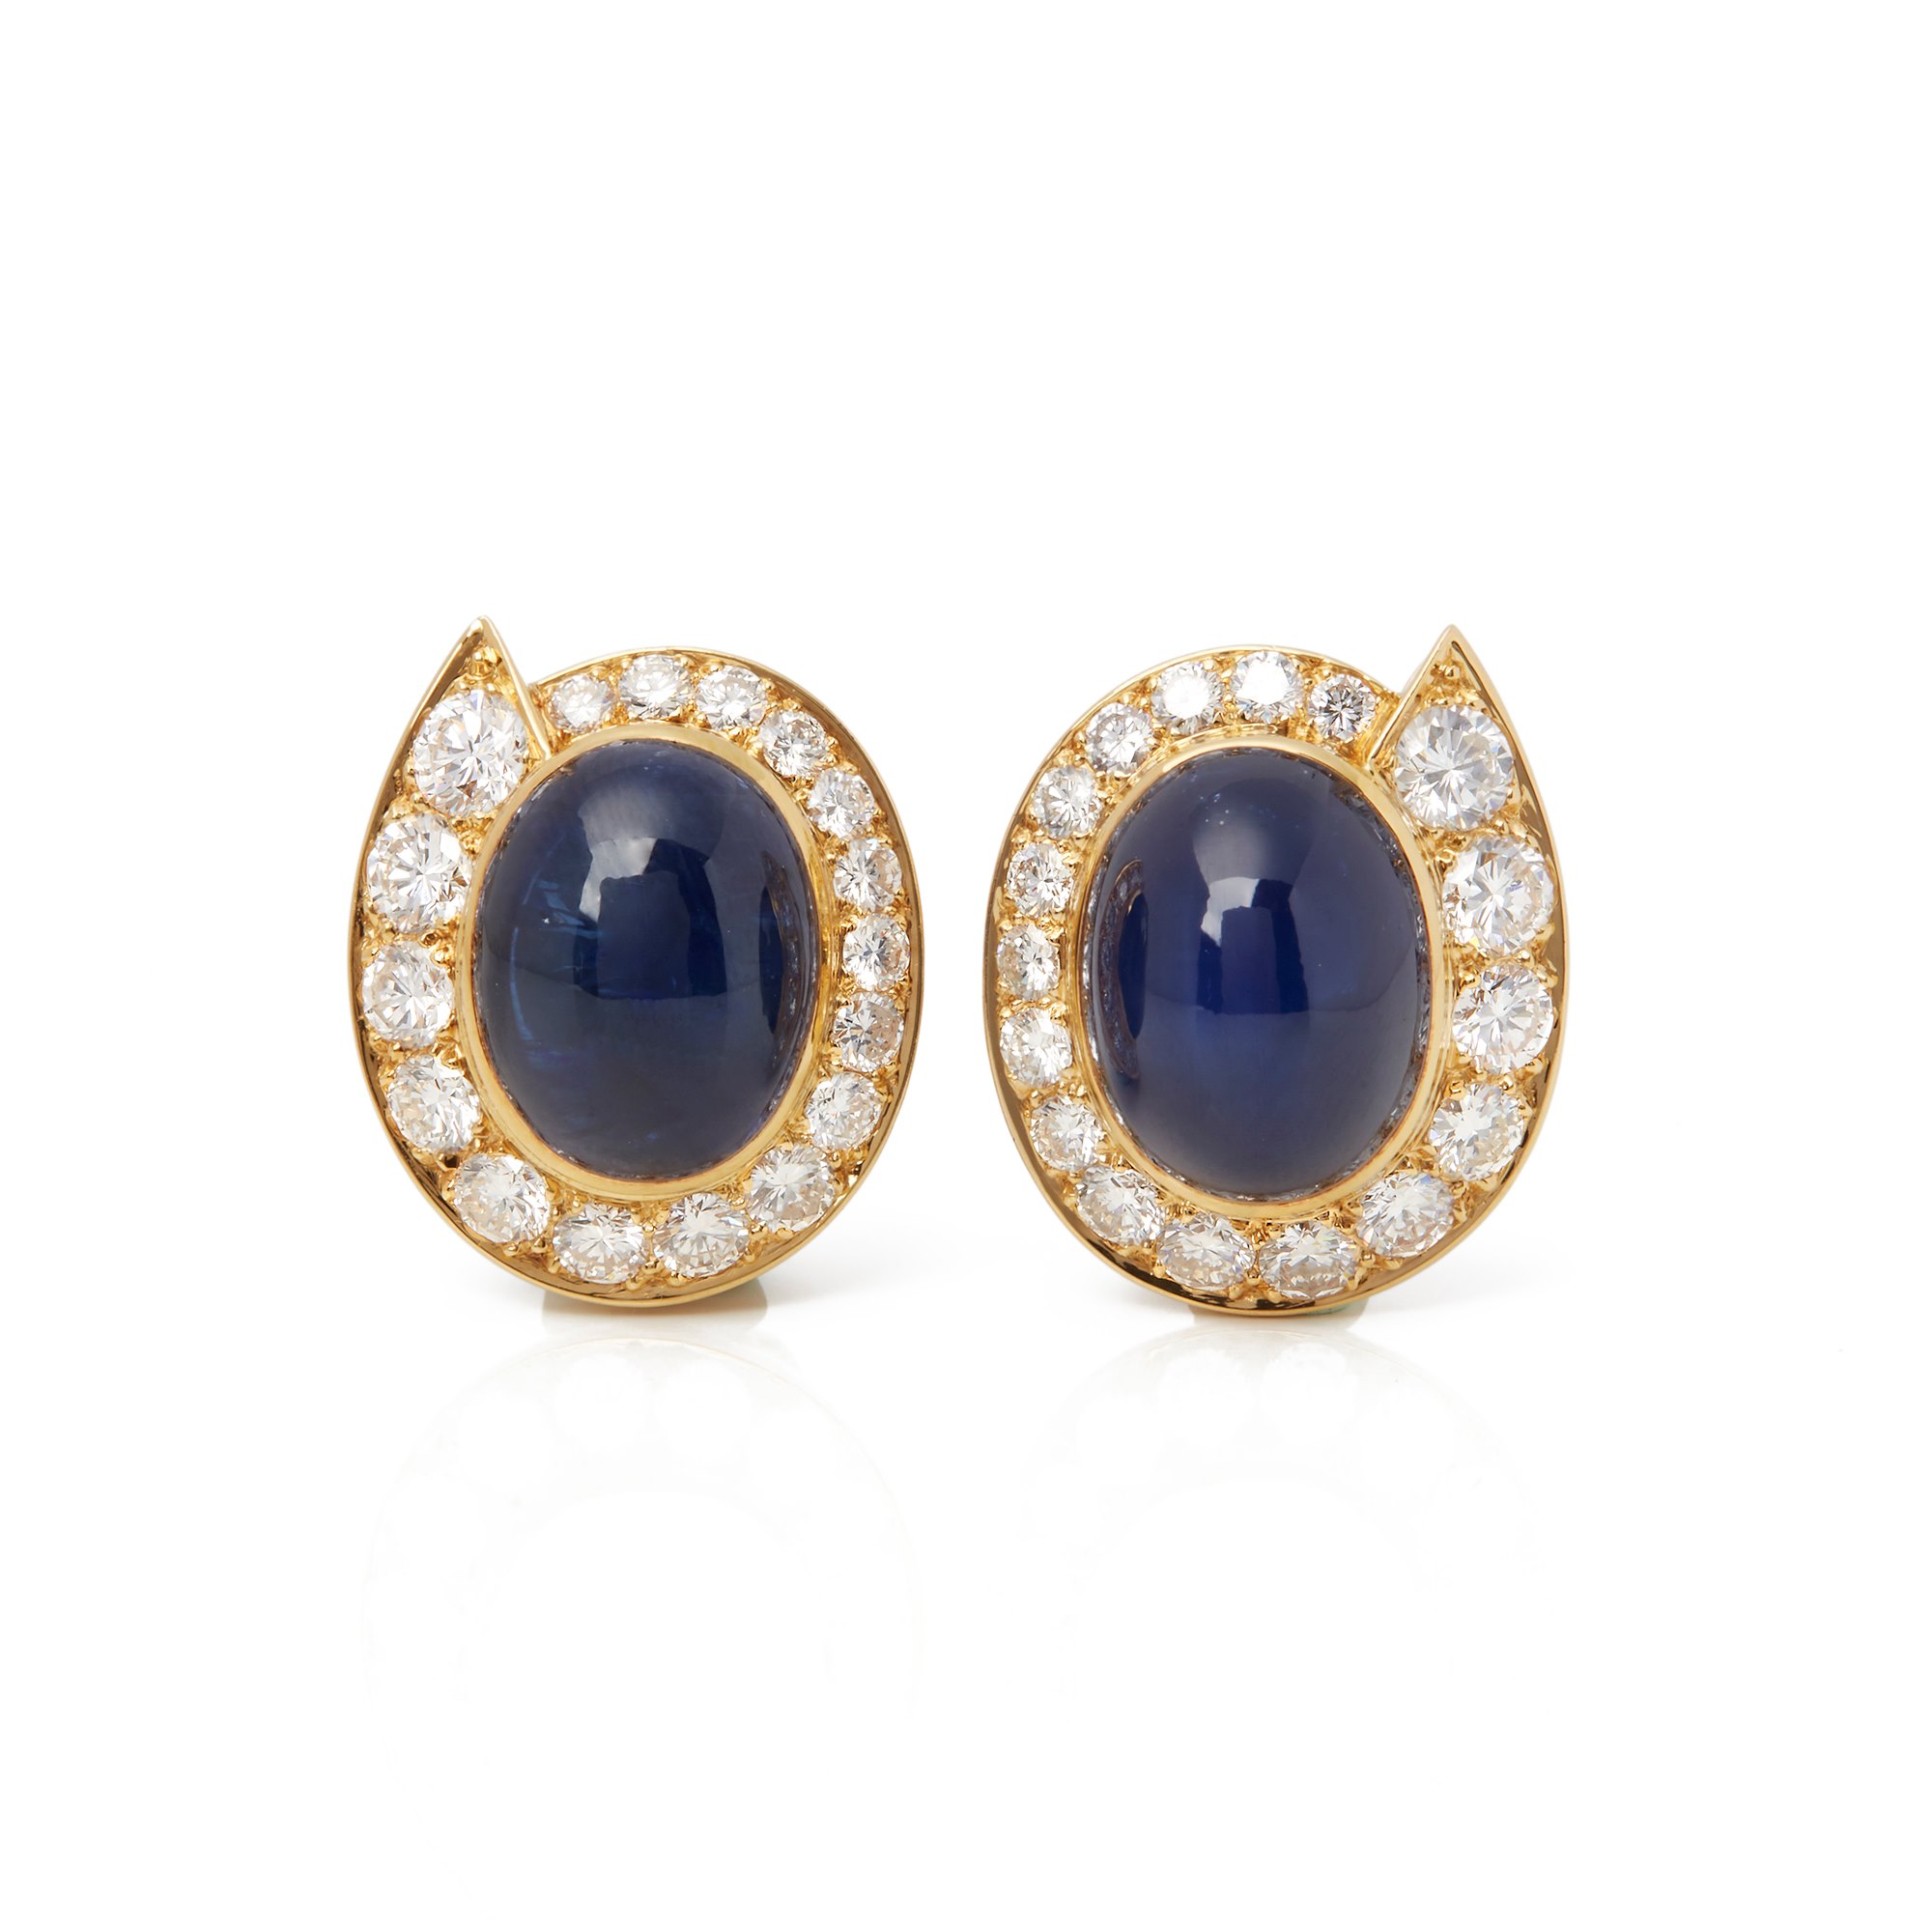 Van Cleef & Arpels 18k Yellow Gold Cabochon Sapphire & Diamond Earrings